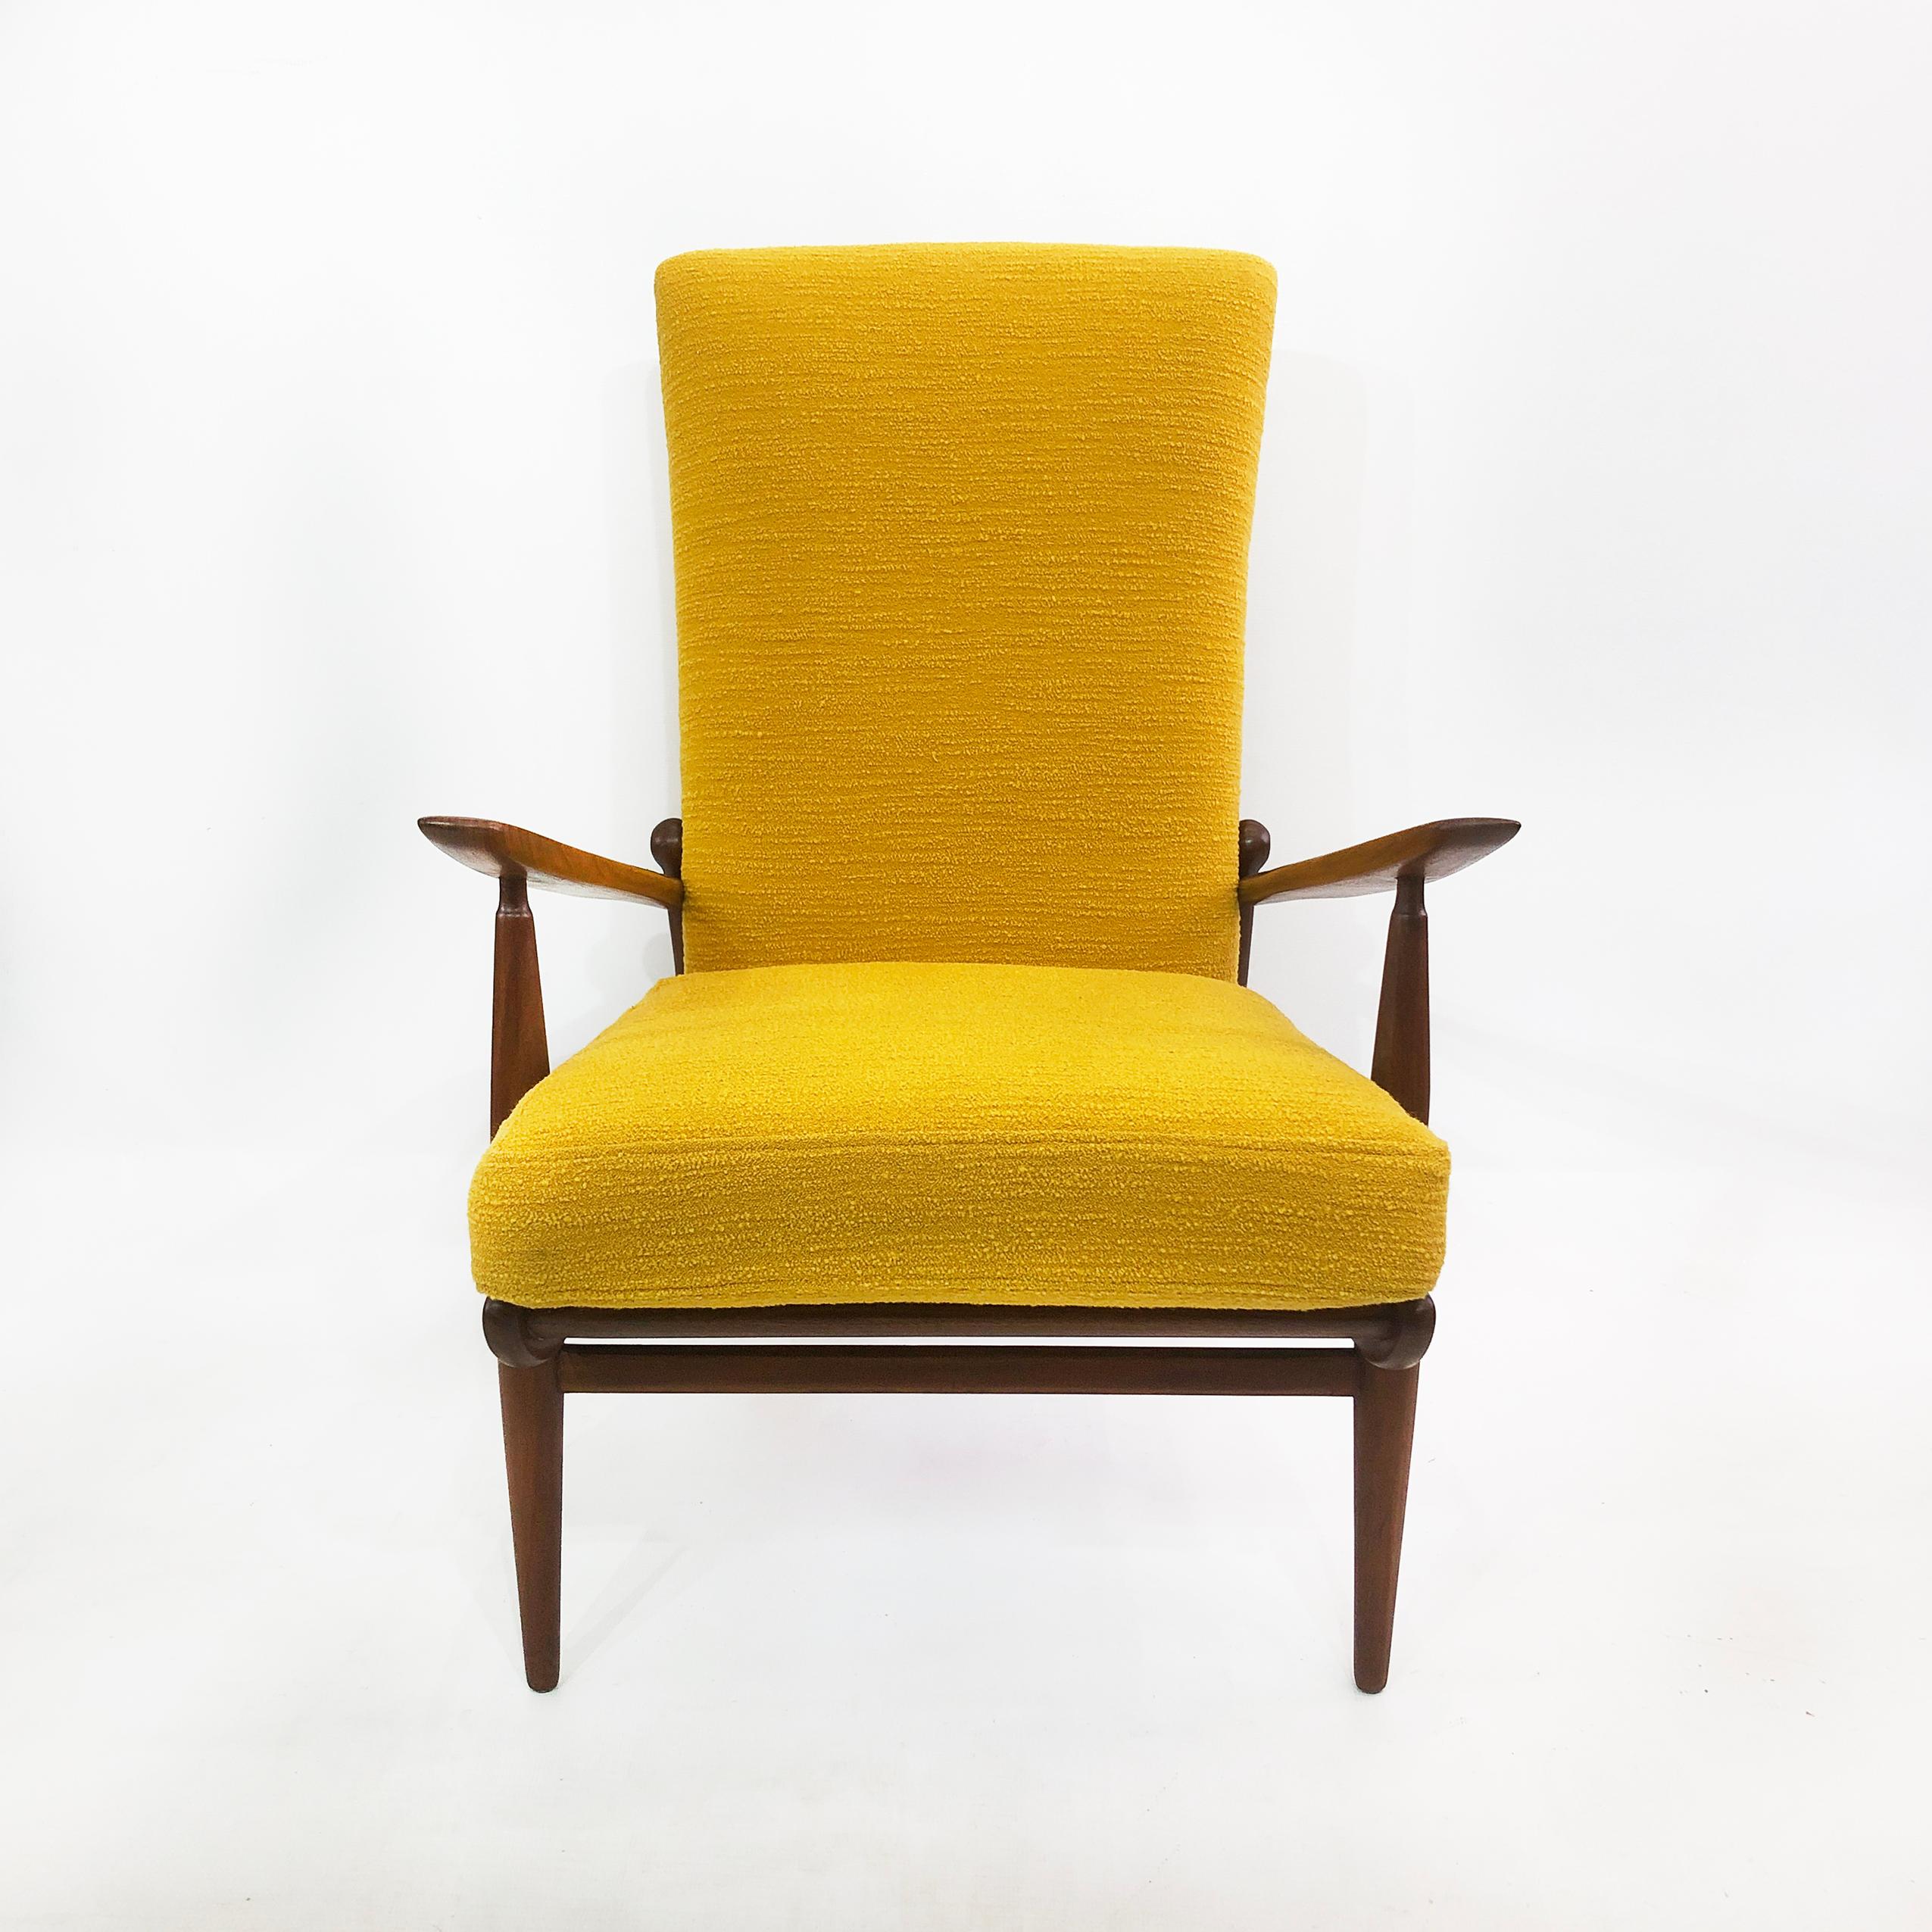 British Midcentury Vintage Danish High Back Yellow Bouclé Armchair Lounge, 1960s For Sale